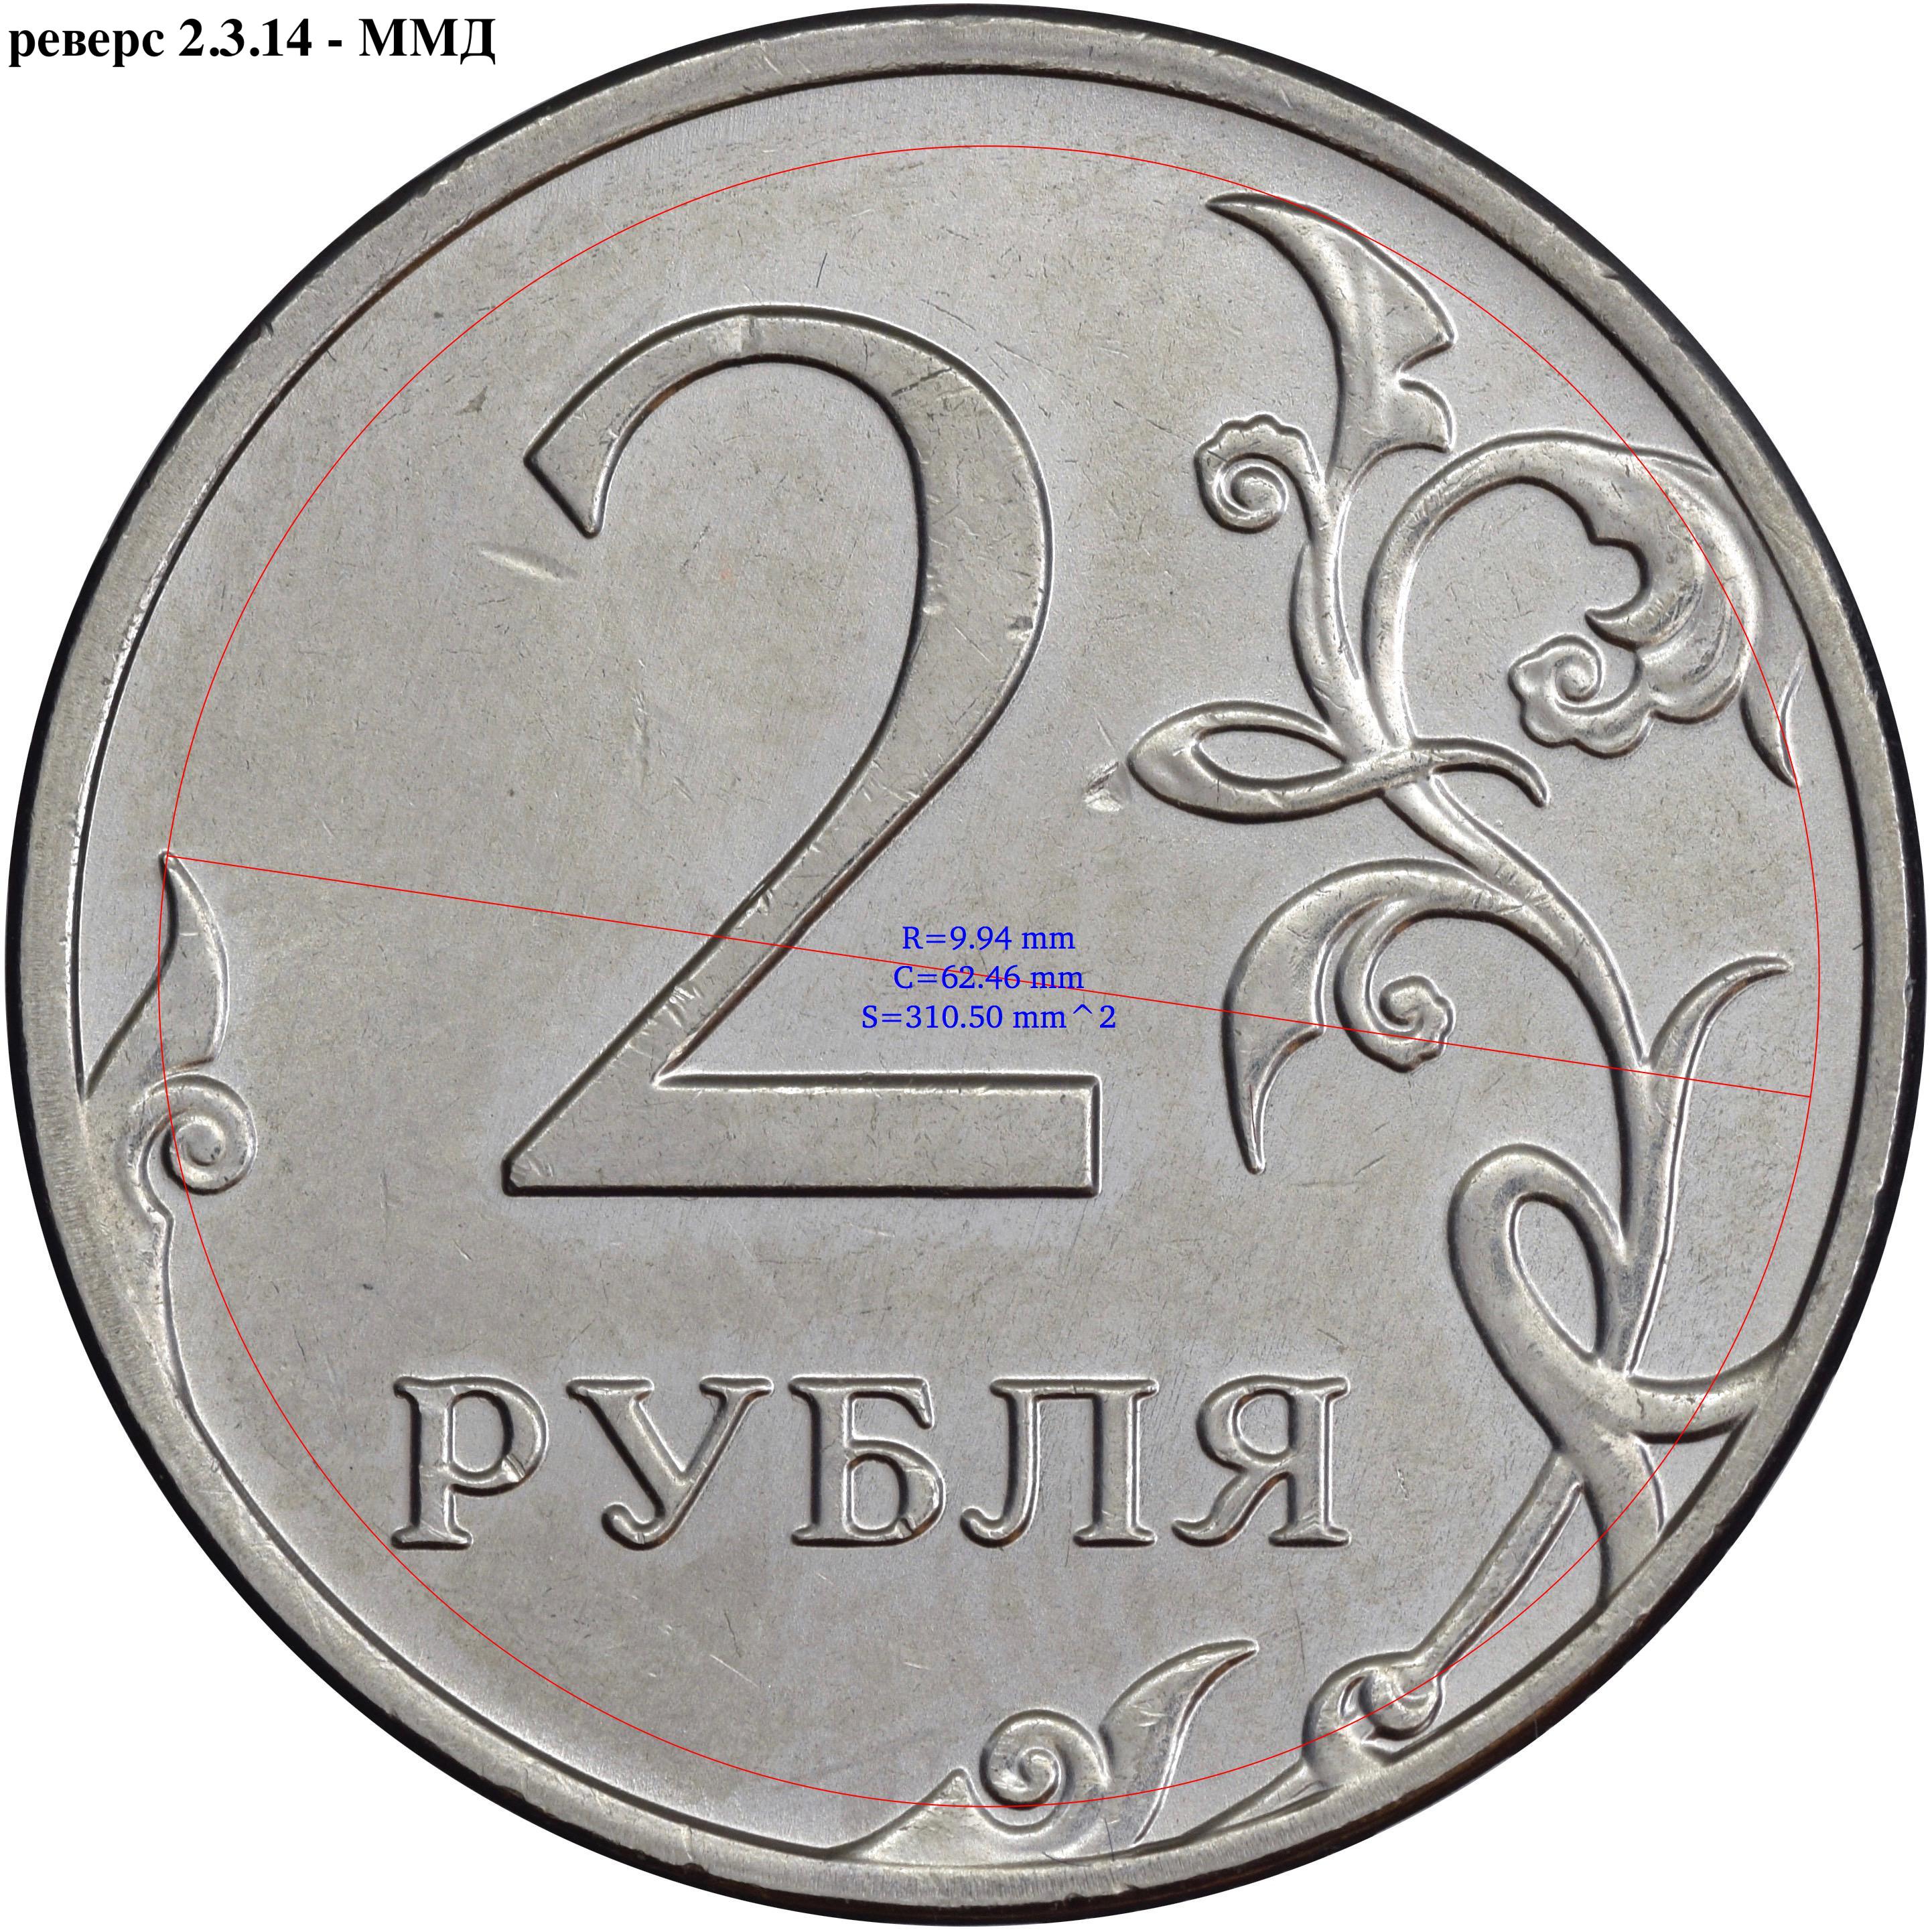 2 рубля 2014 ммд 2.3.14 - замер 2 размера изображения